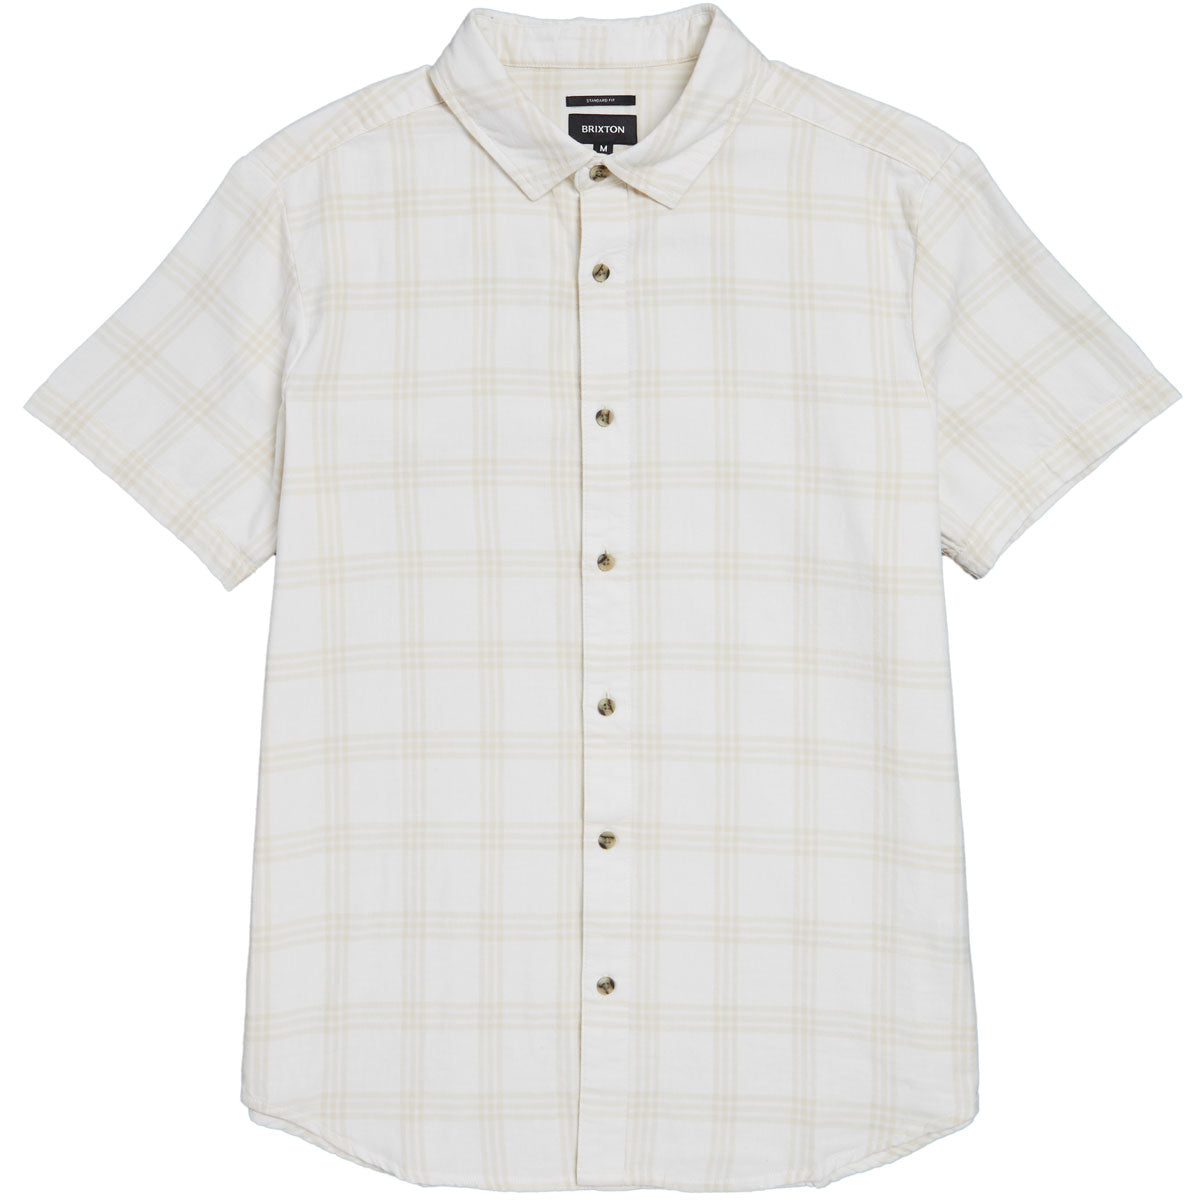 Brixton Crosby Plaid Shirt - Off White/Bison image 1